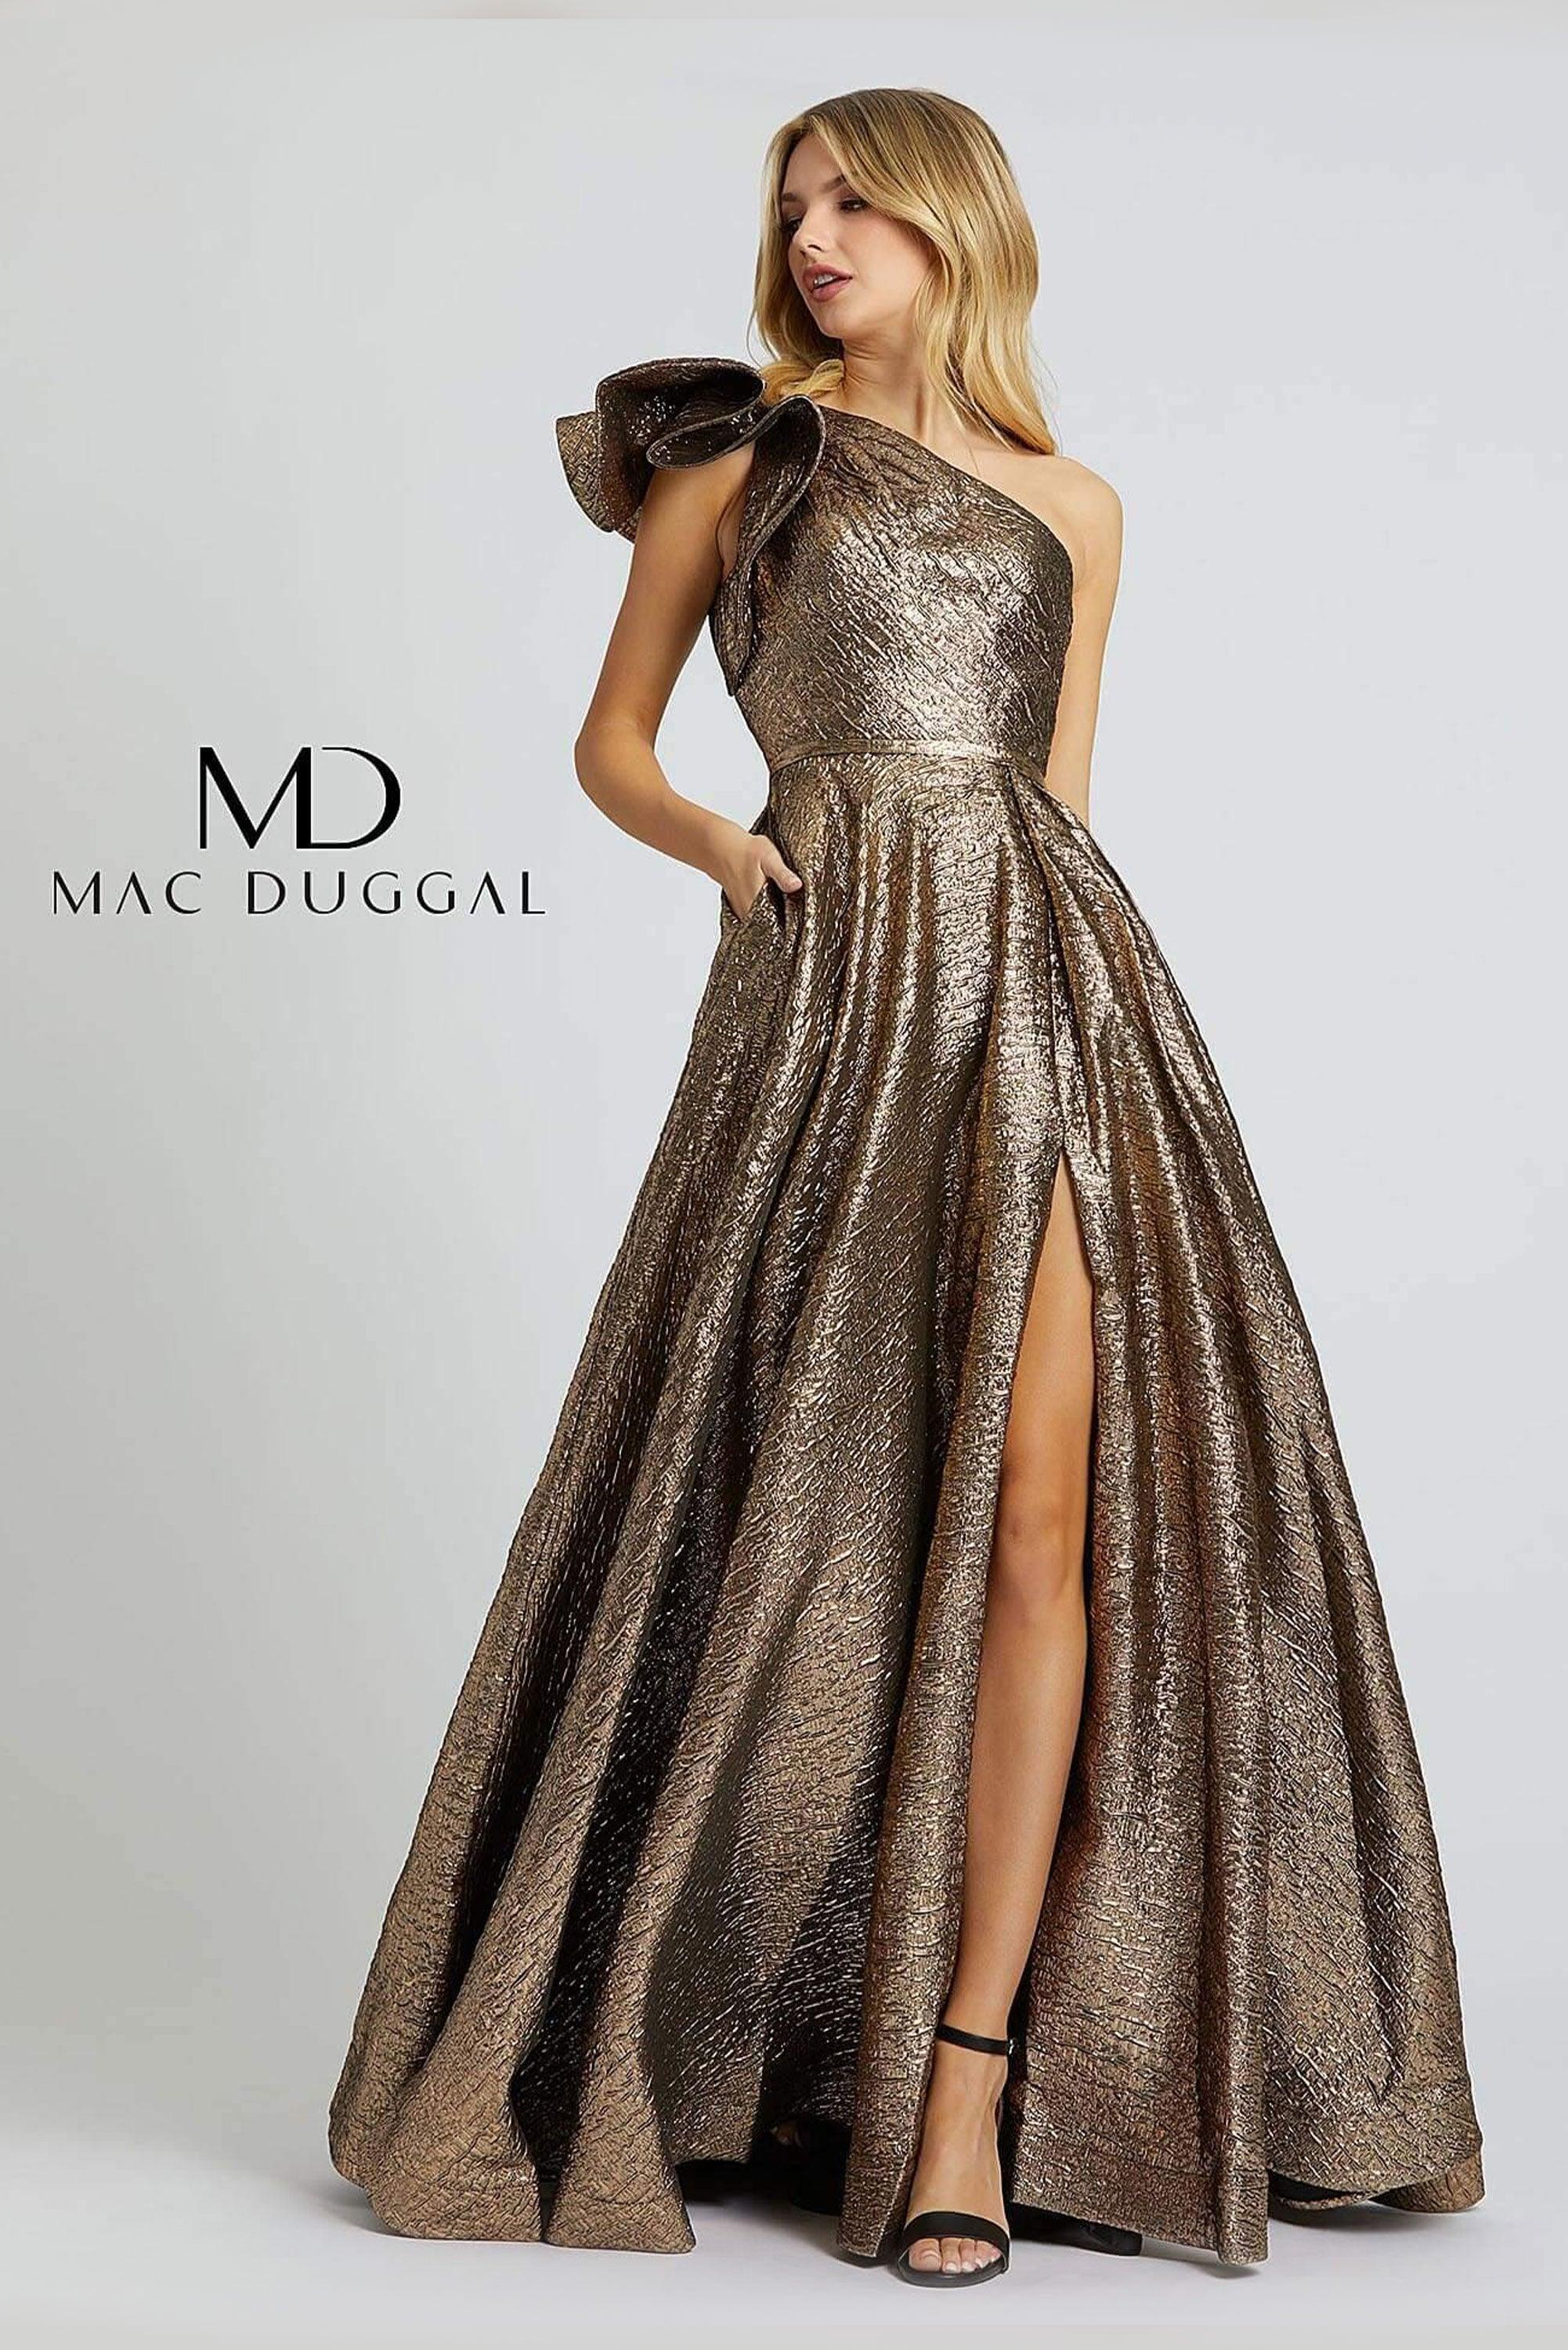 macdougall dress